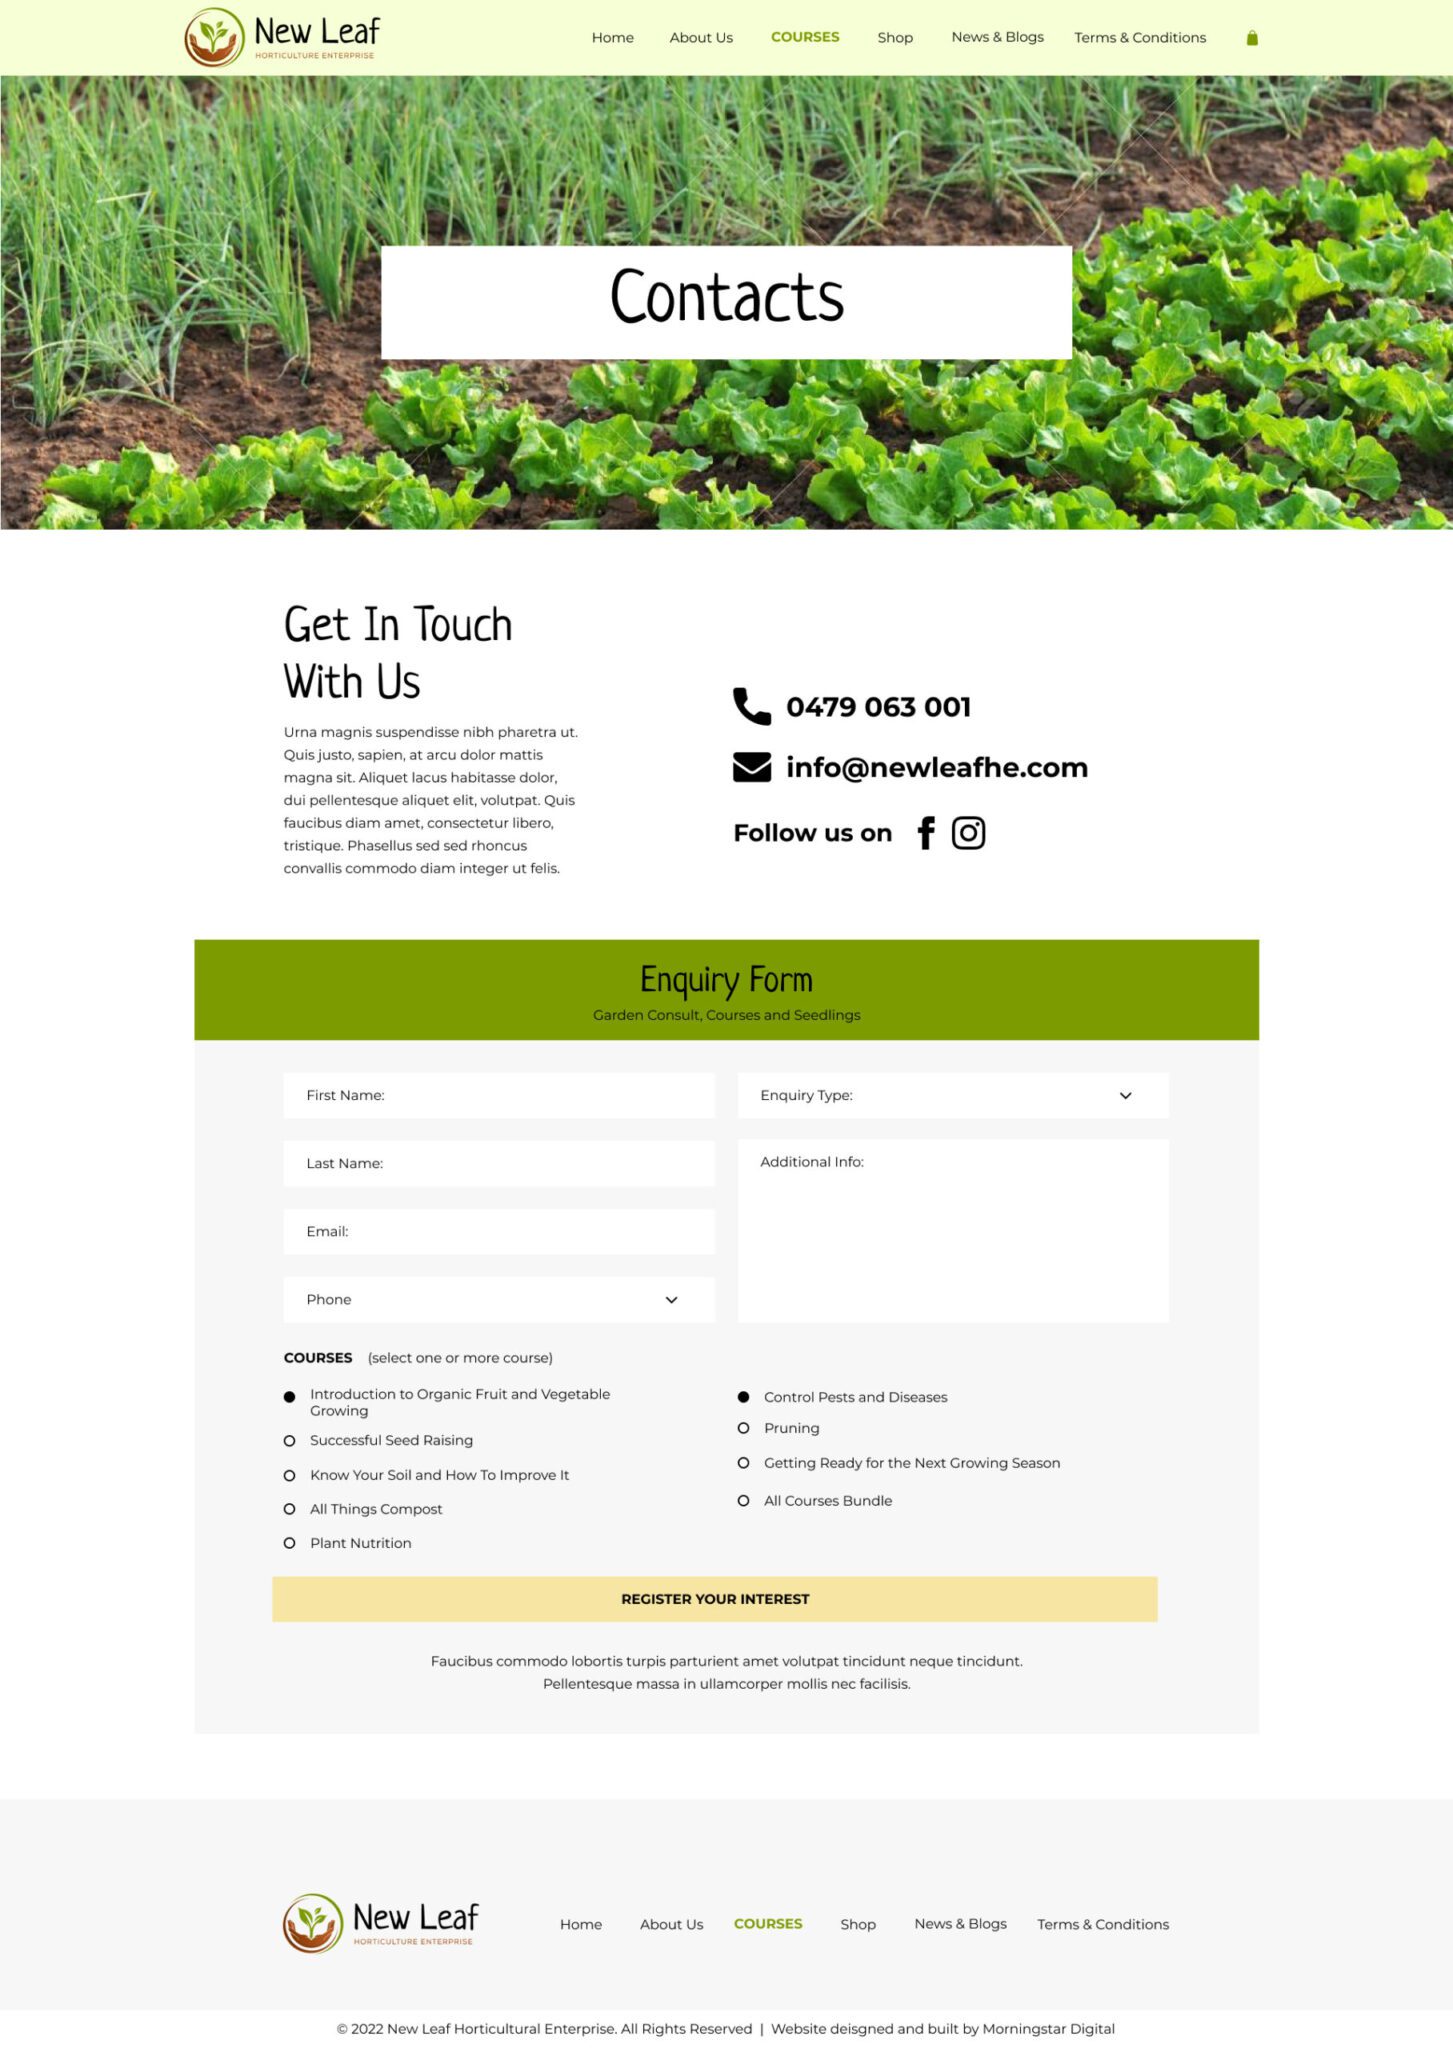 New Leaf Horticultural Enterprise ContactUs